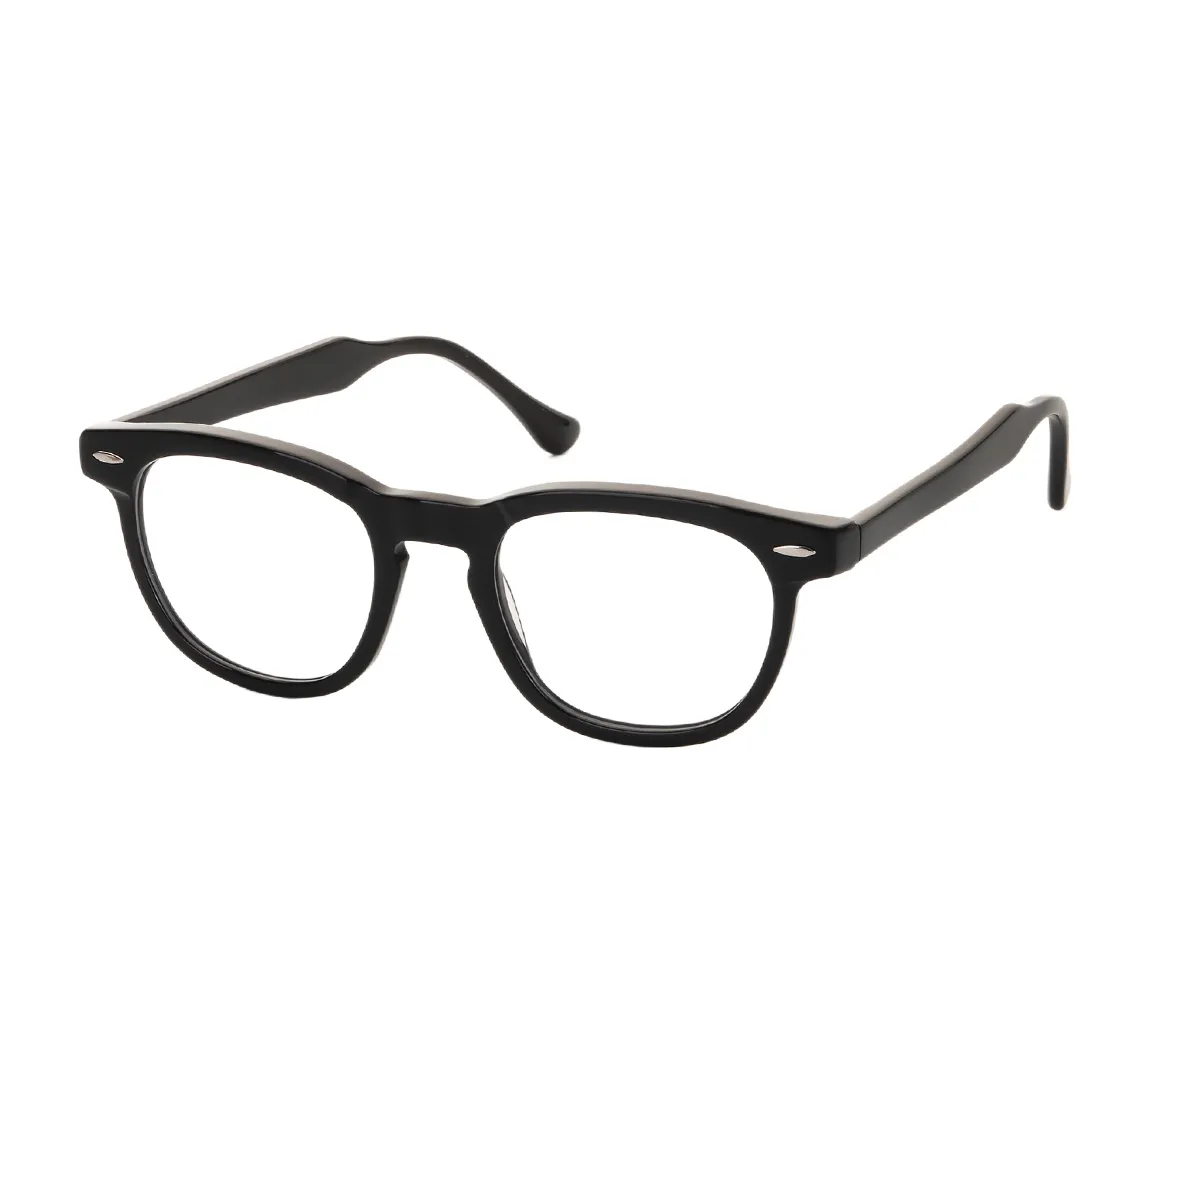 Linga - Square Black Glasses for Men & Women